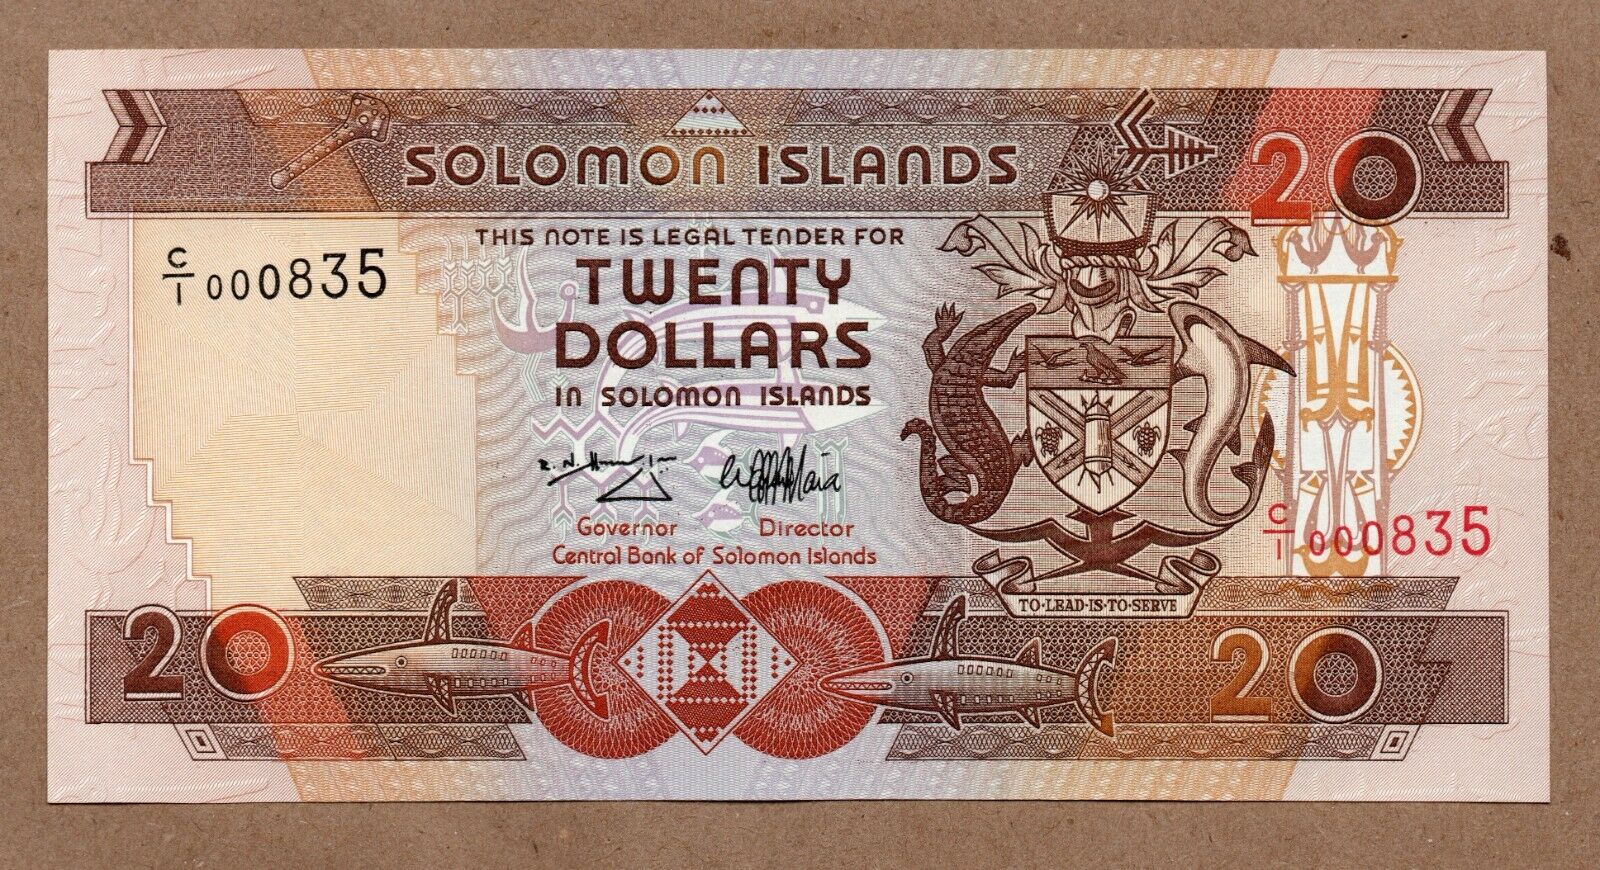 SOLOMON ISLANDS - 20 DOLLARS - ND1996 - NICE SERIAL# 000835 - P21 - UNCIRCULATED